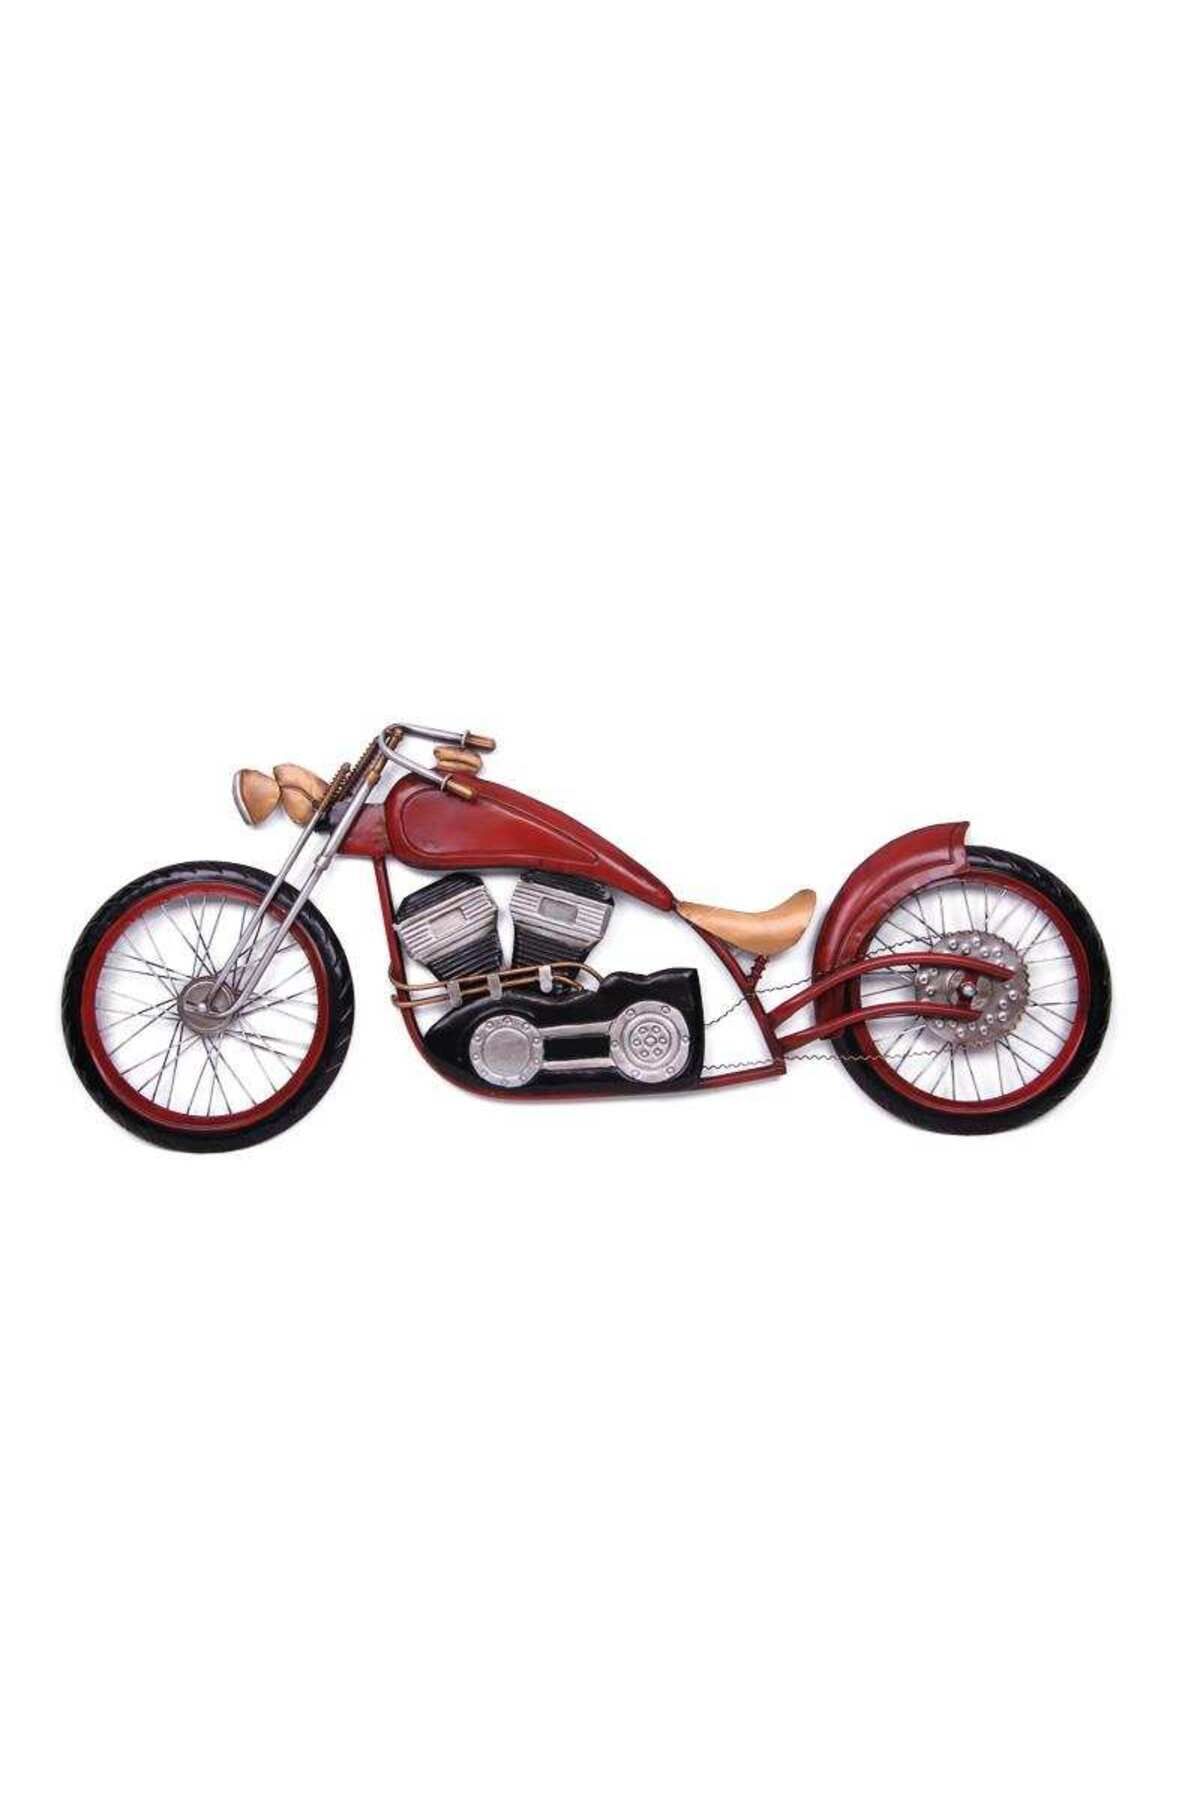 Genel Markalar Motorsiklet Pano Vintage Dekoratif Hediyelik